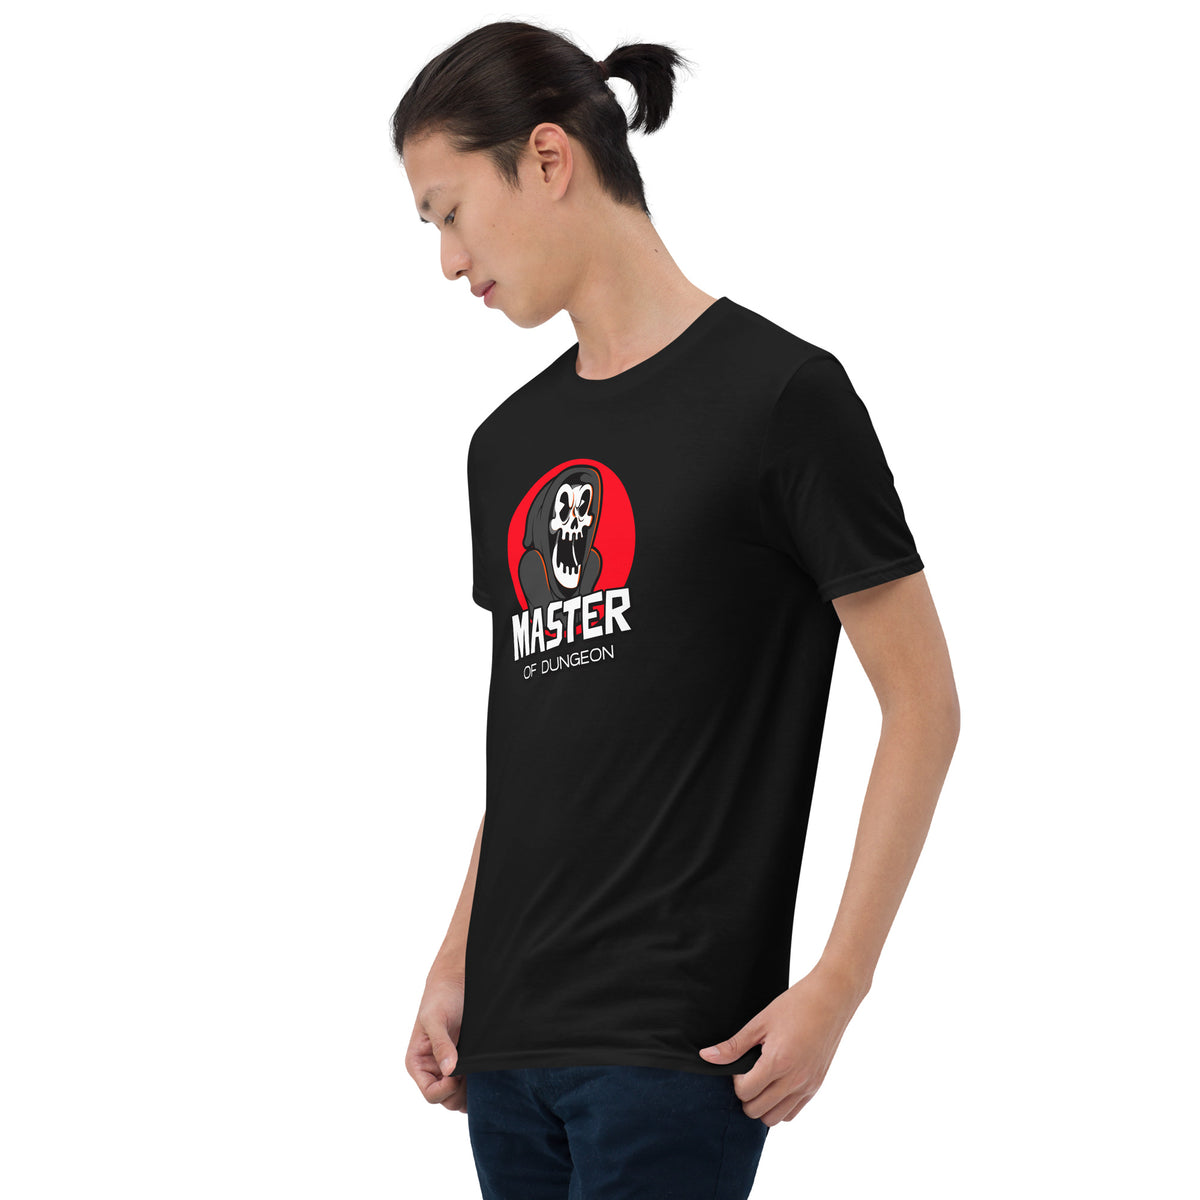 Master of Dungeon Game T-Shirt